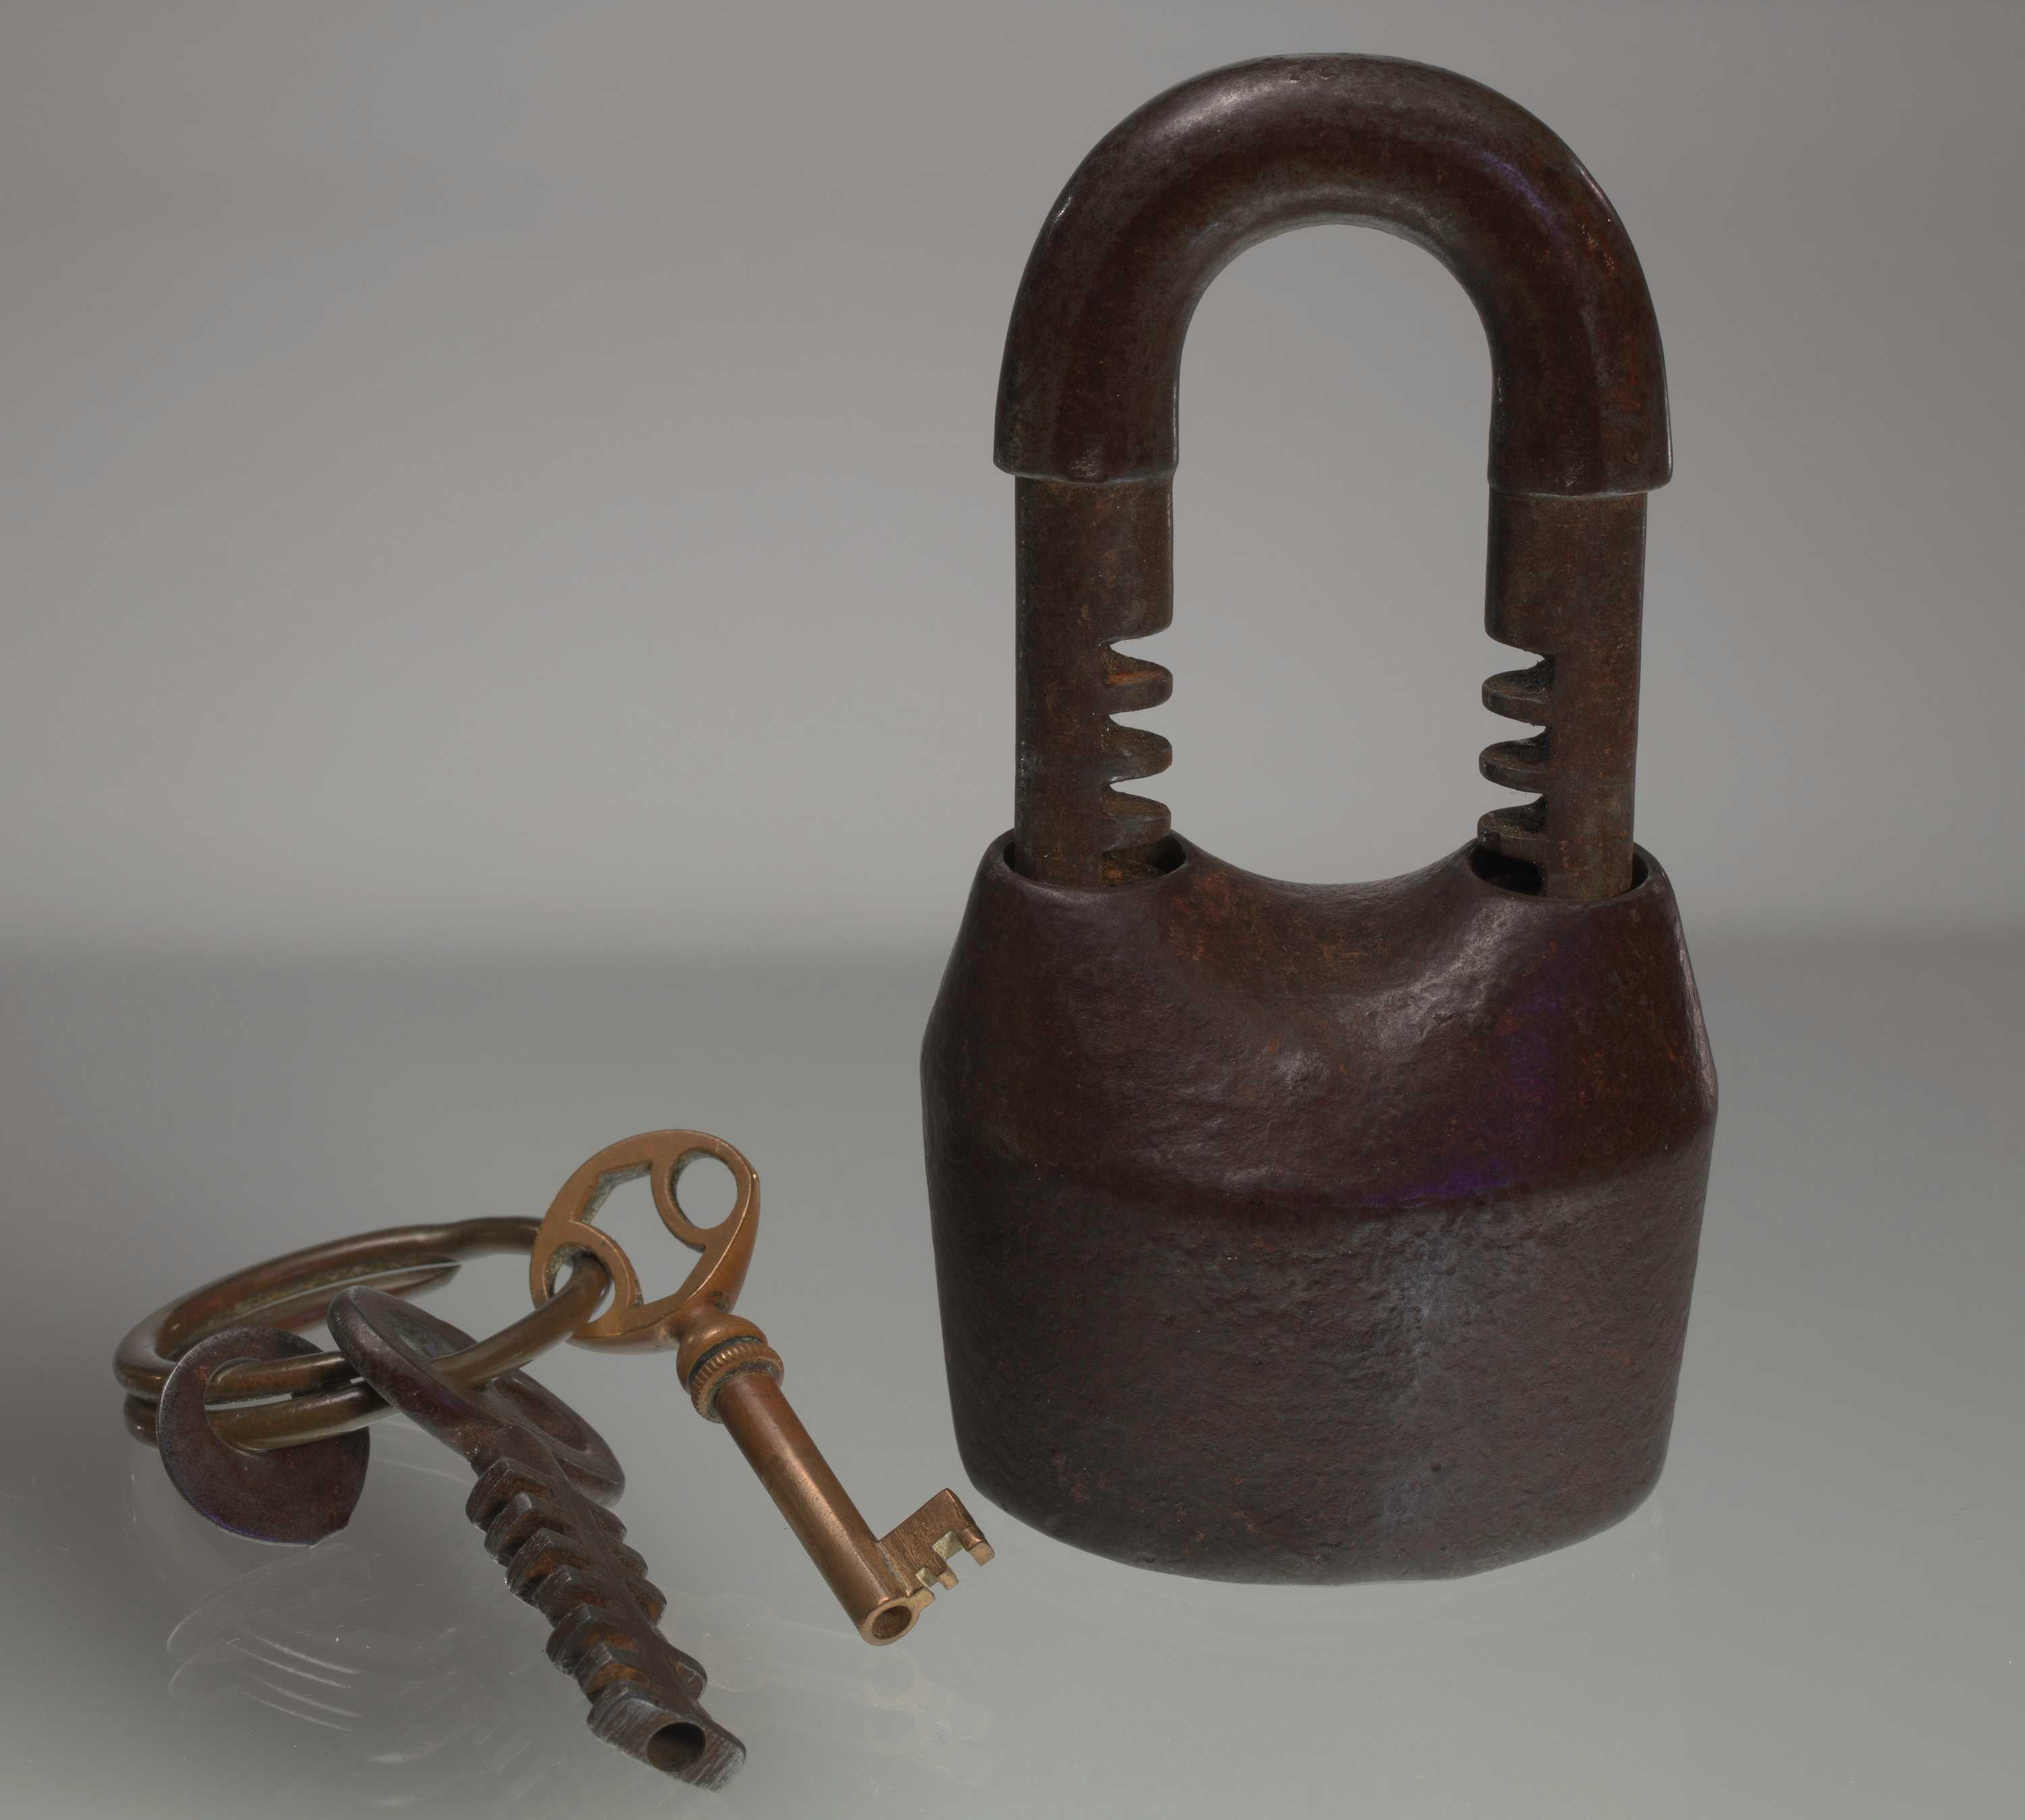 Iron padlock displayed with key chain with 2 keys